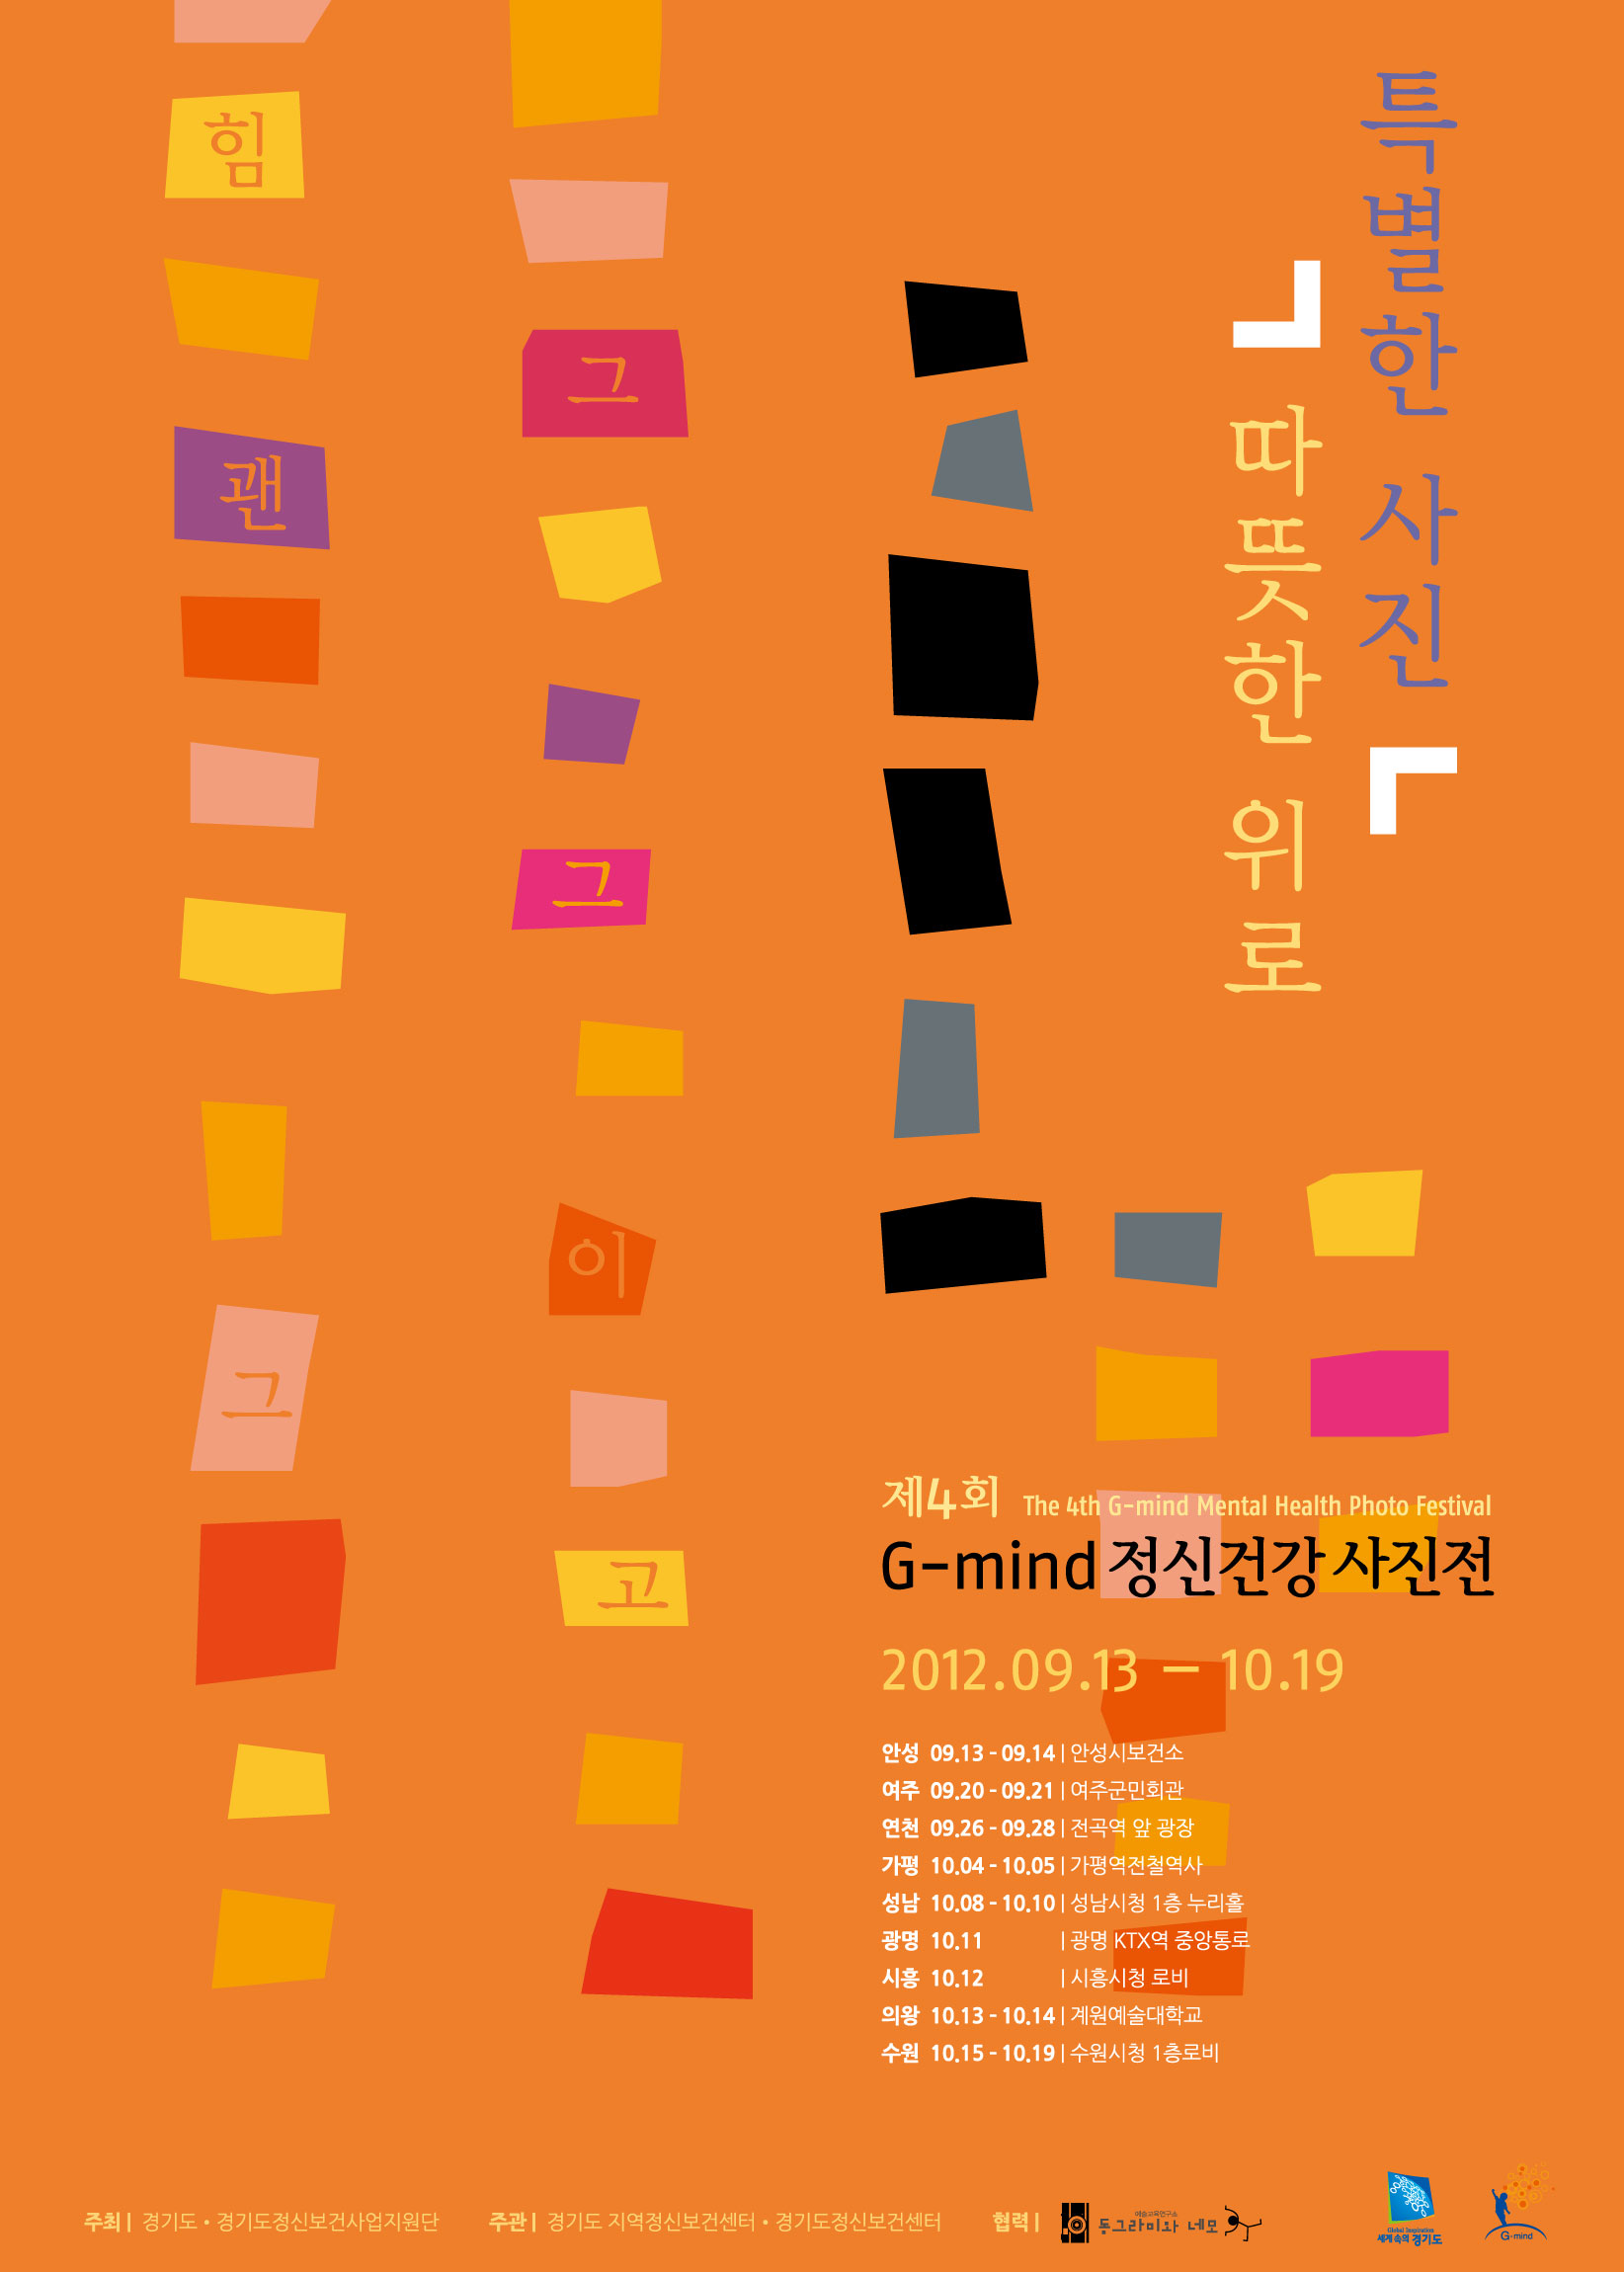 G-mind Mental Health Photo Exhibition Poster